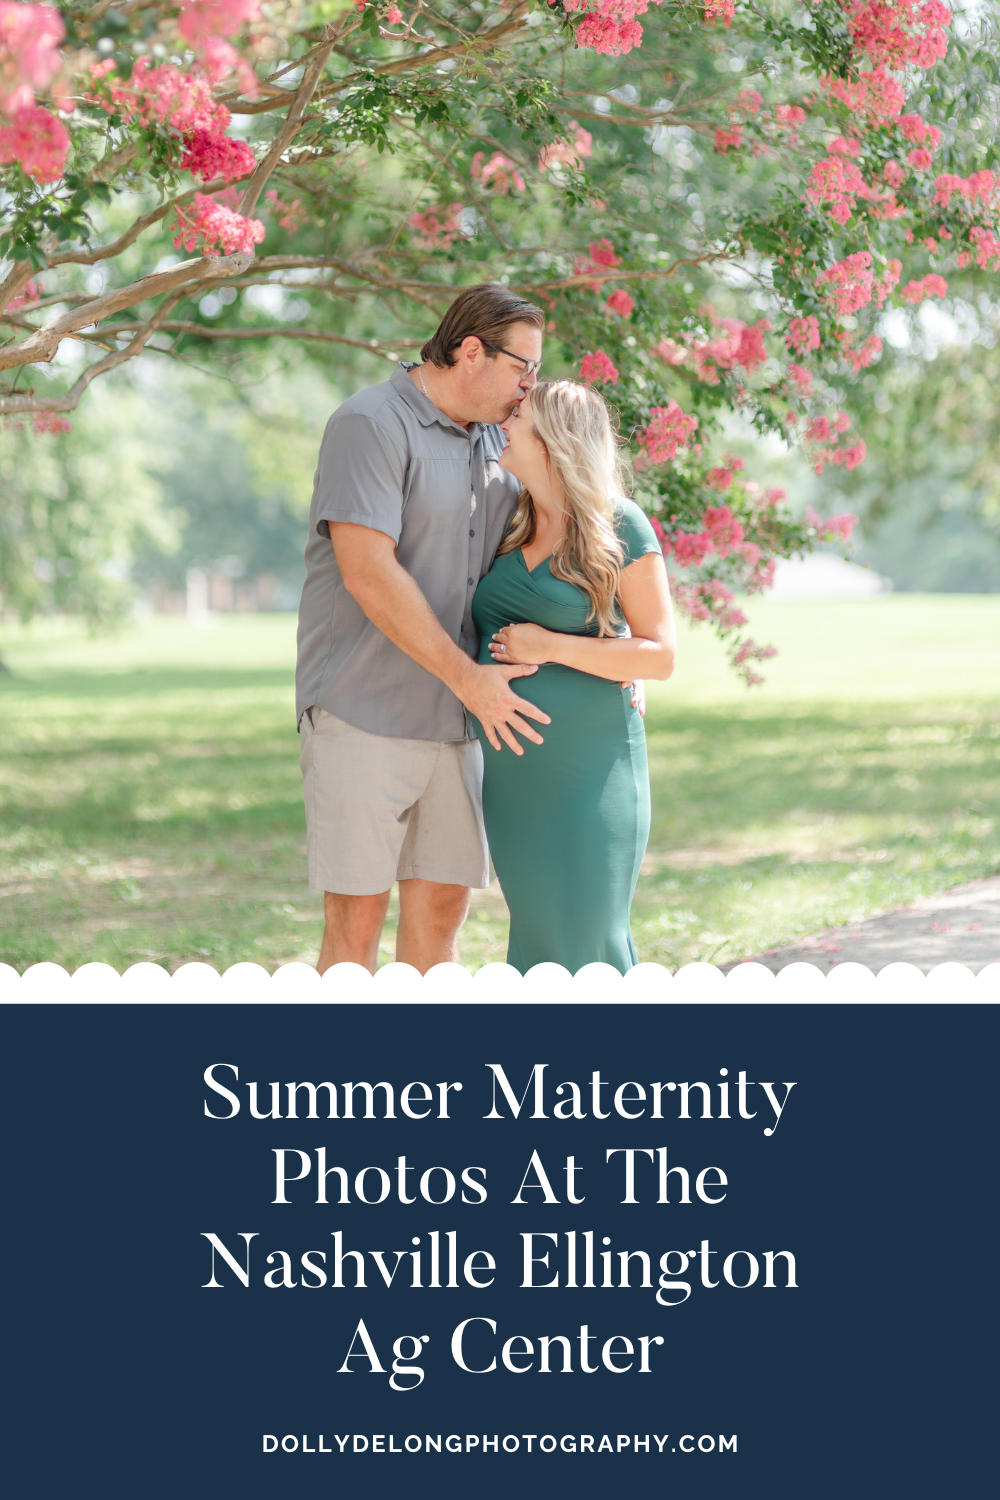 Pinterest_Pin_Summer_Maternity_Photos_At_The_Nashville_Ellington_Ag_Center